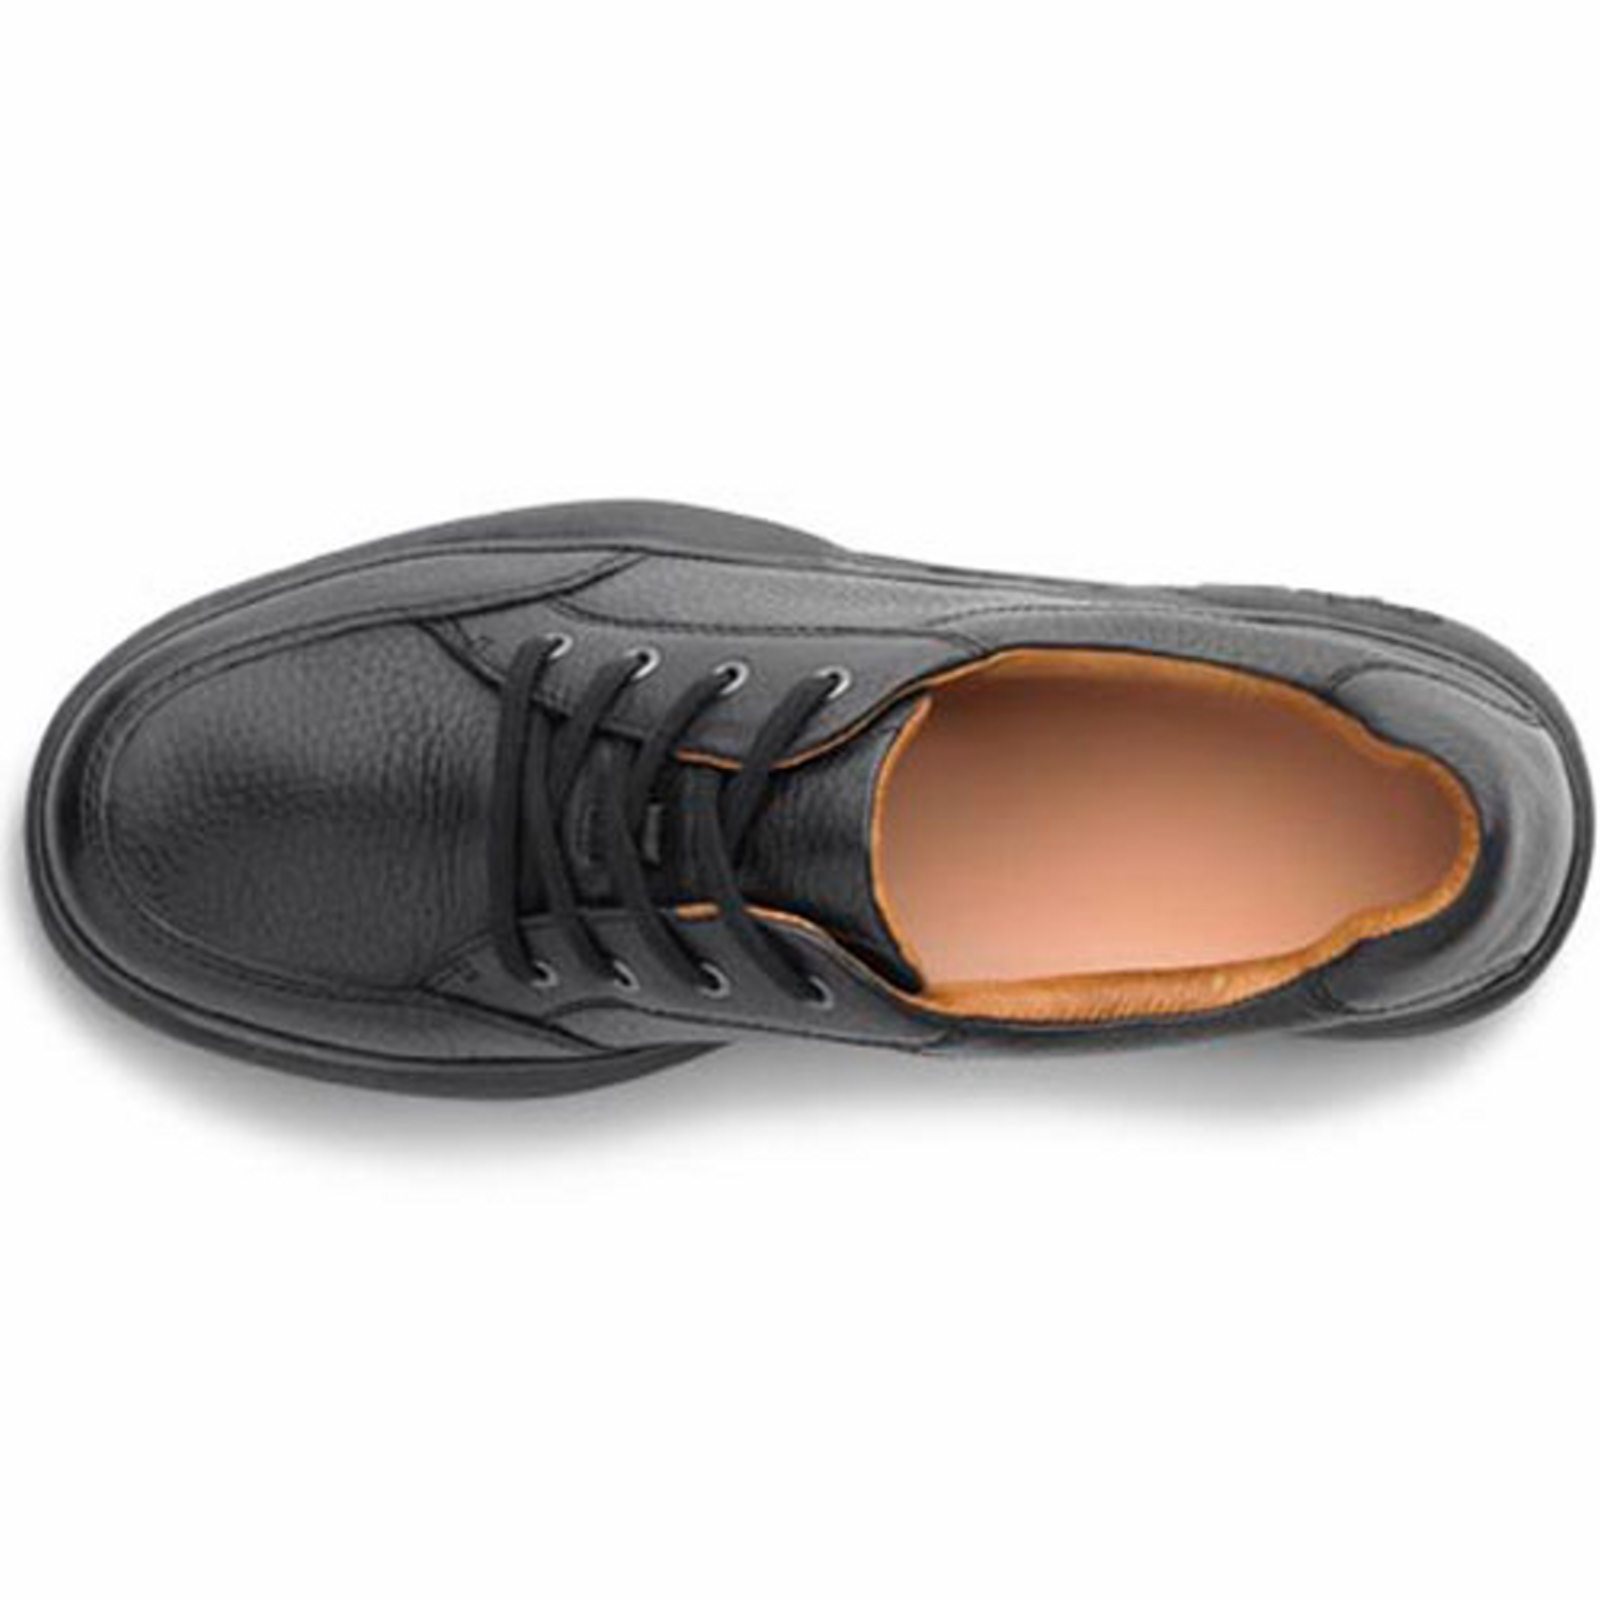 Dr. Comfort Justin Men's Casual Shoe: 9.5 Wide (E/2E) Chestnut Suede Lace - image 4 of 4